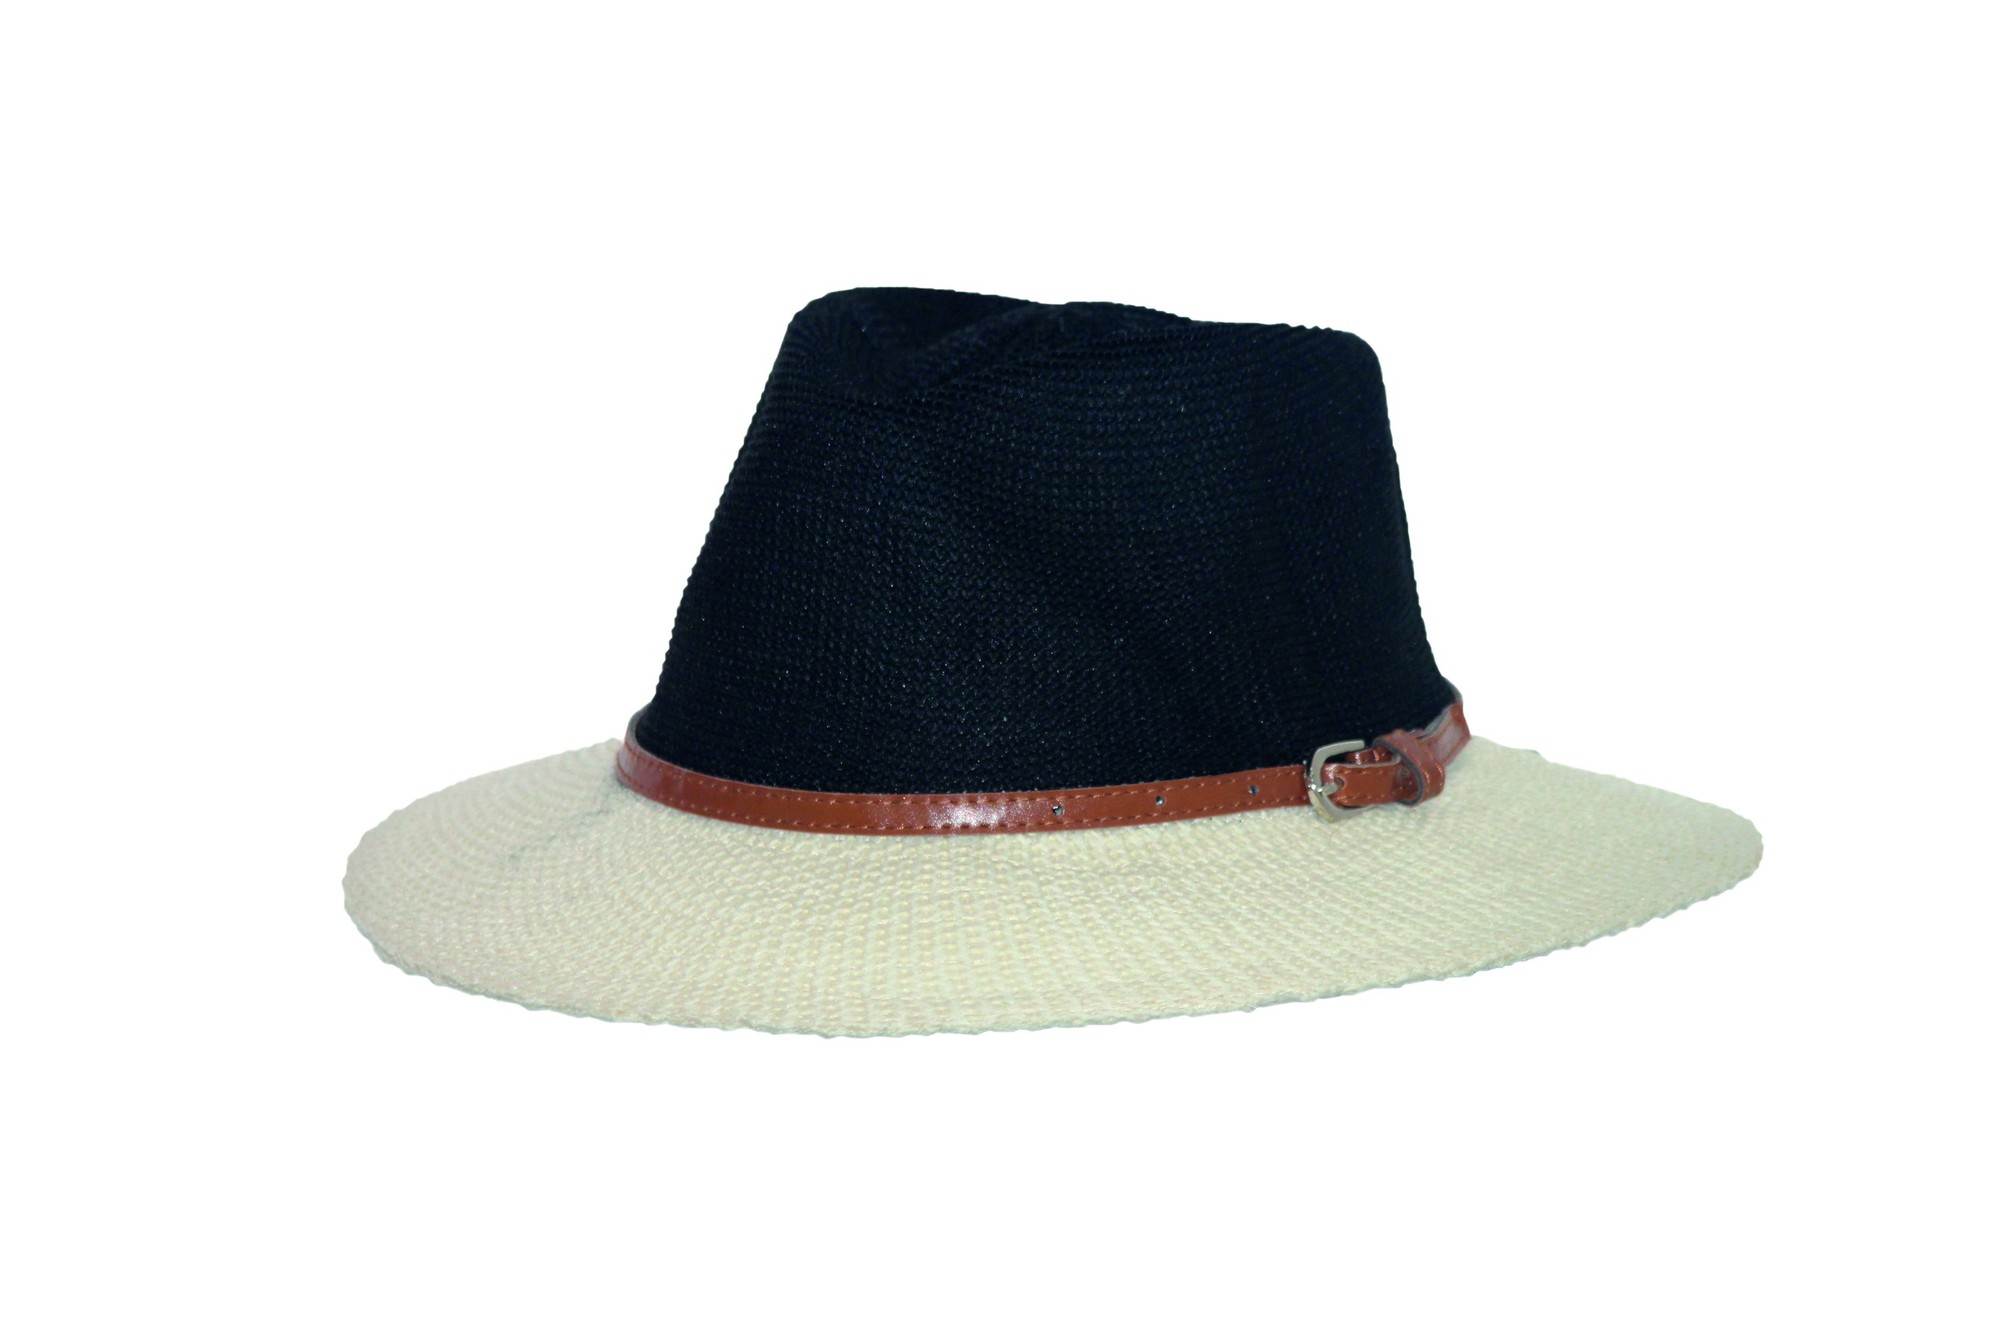 Rigon - UV sun hat for women with belt trim - Black